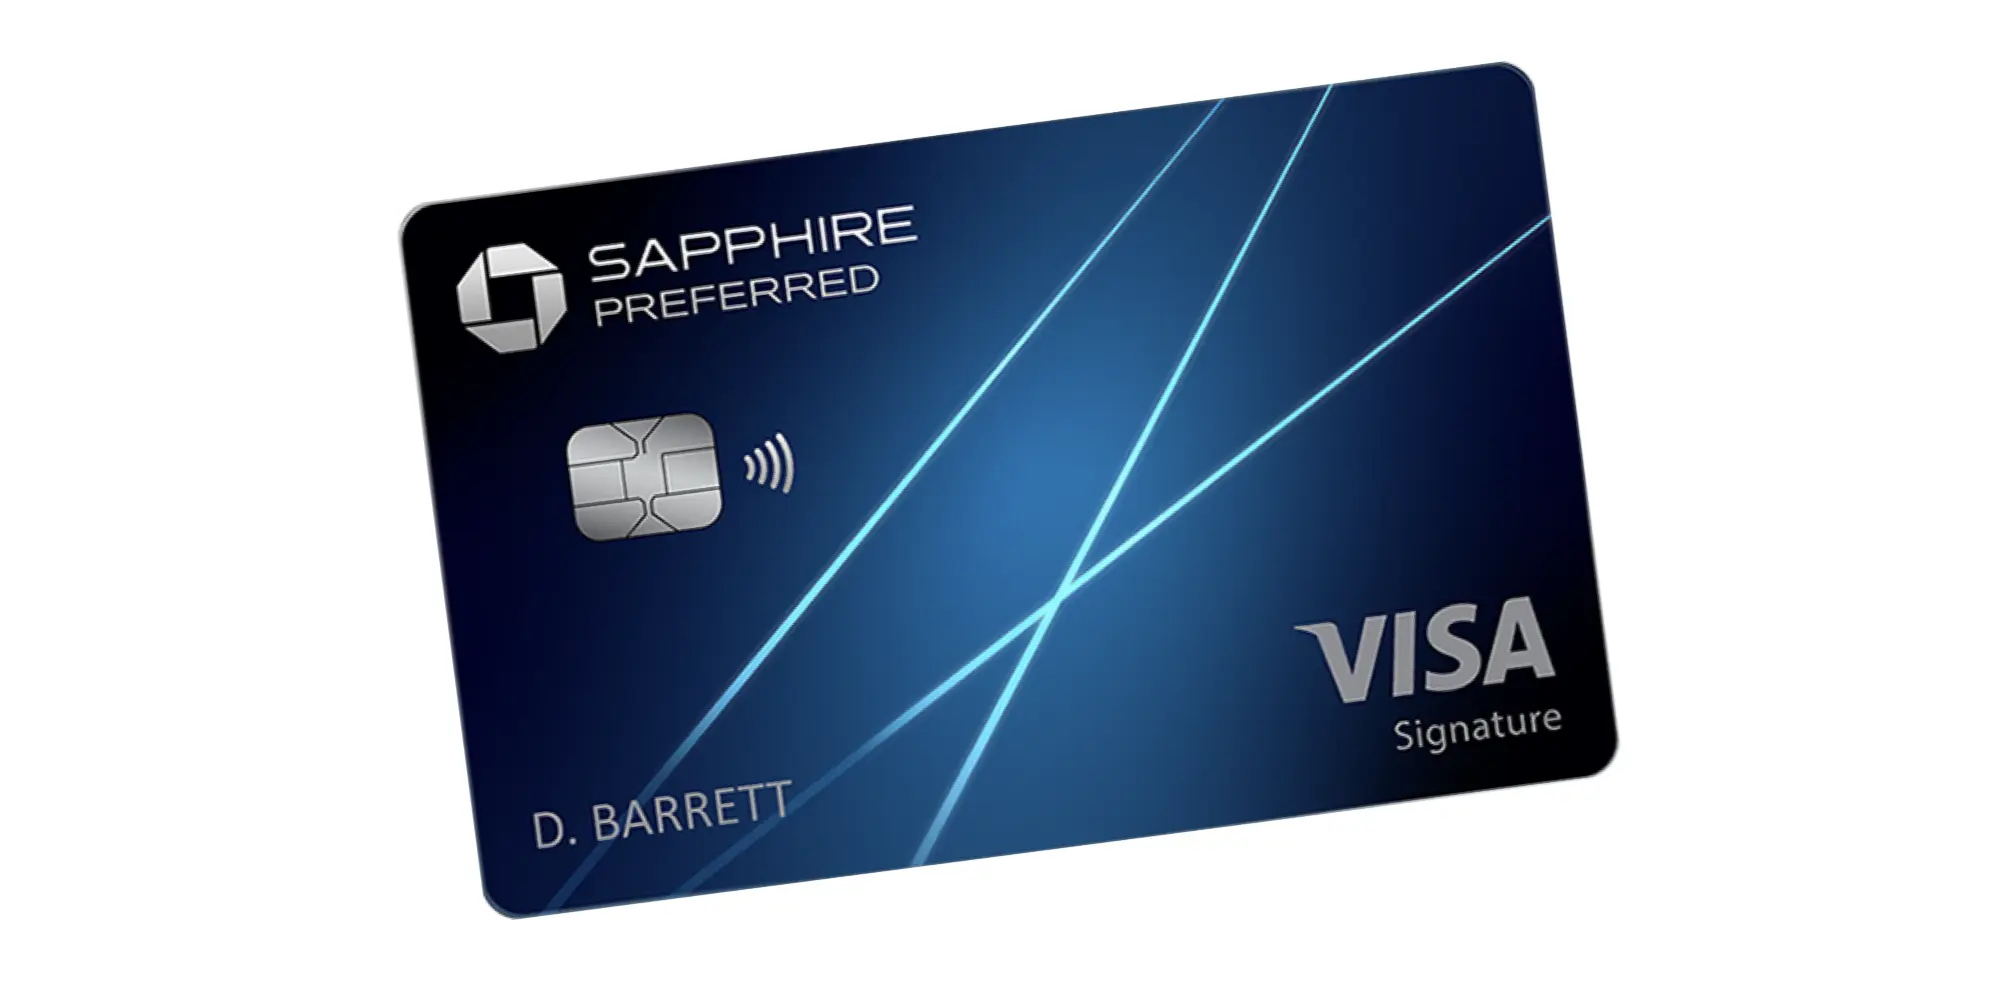 Chase Sapphire Preferred Visa Card